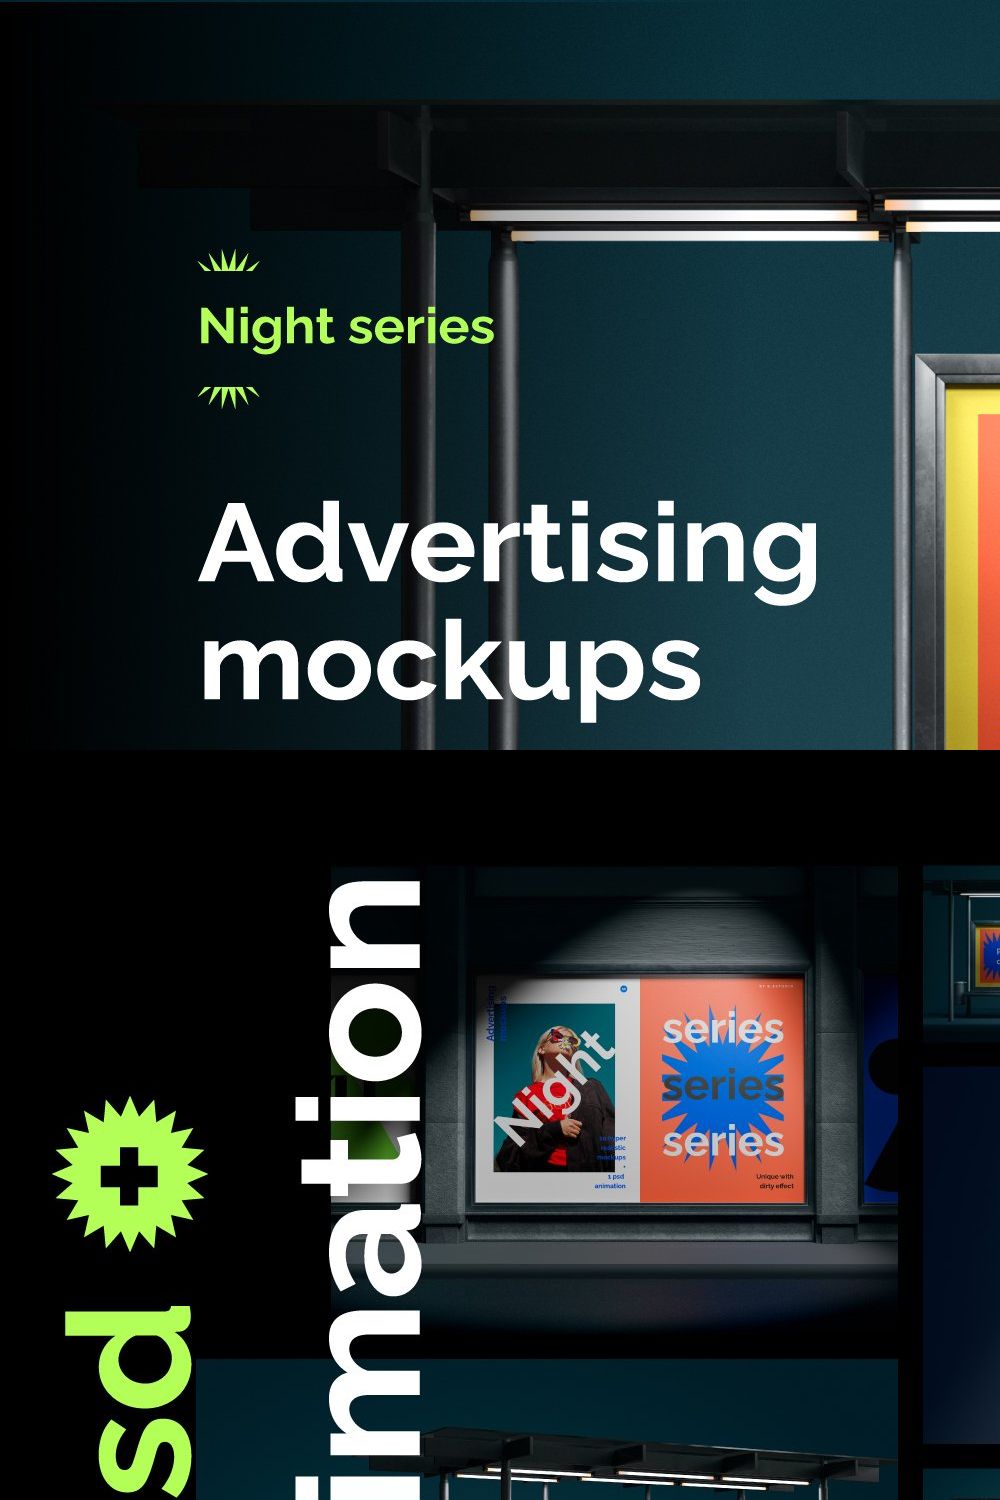 Advertising mockups - Night series pinterest preview image.